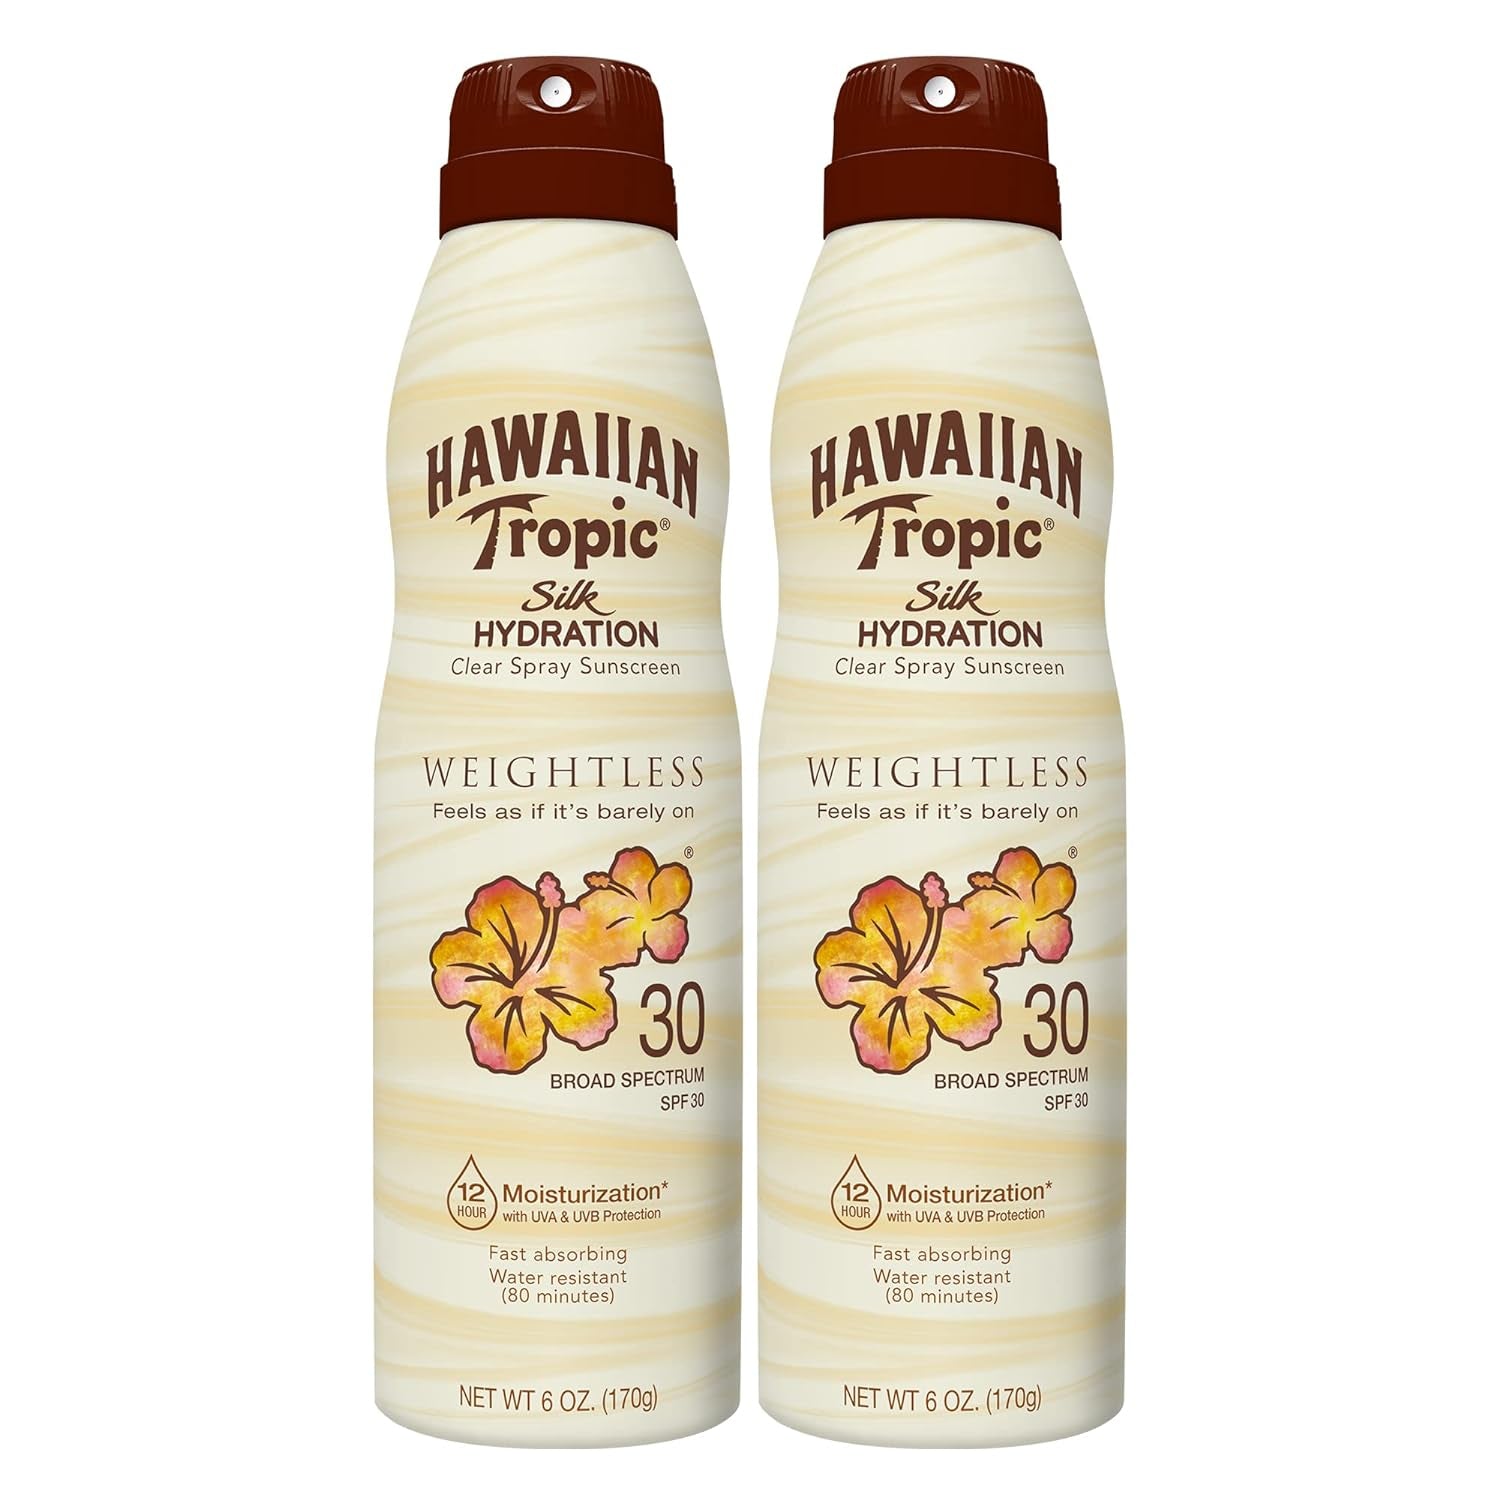 "Hawaiian Tropic Weightless Hydration Clear Spray Sunscreen SPF 30 Twin Pack - Oxybenzone Free, 6oz Each"